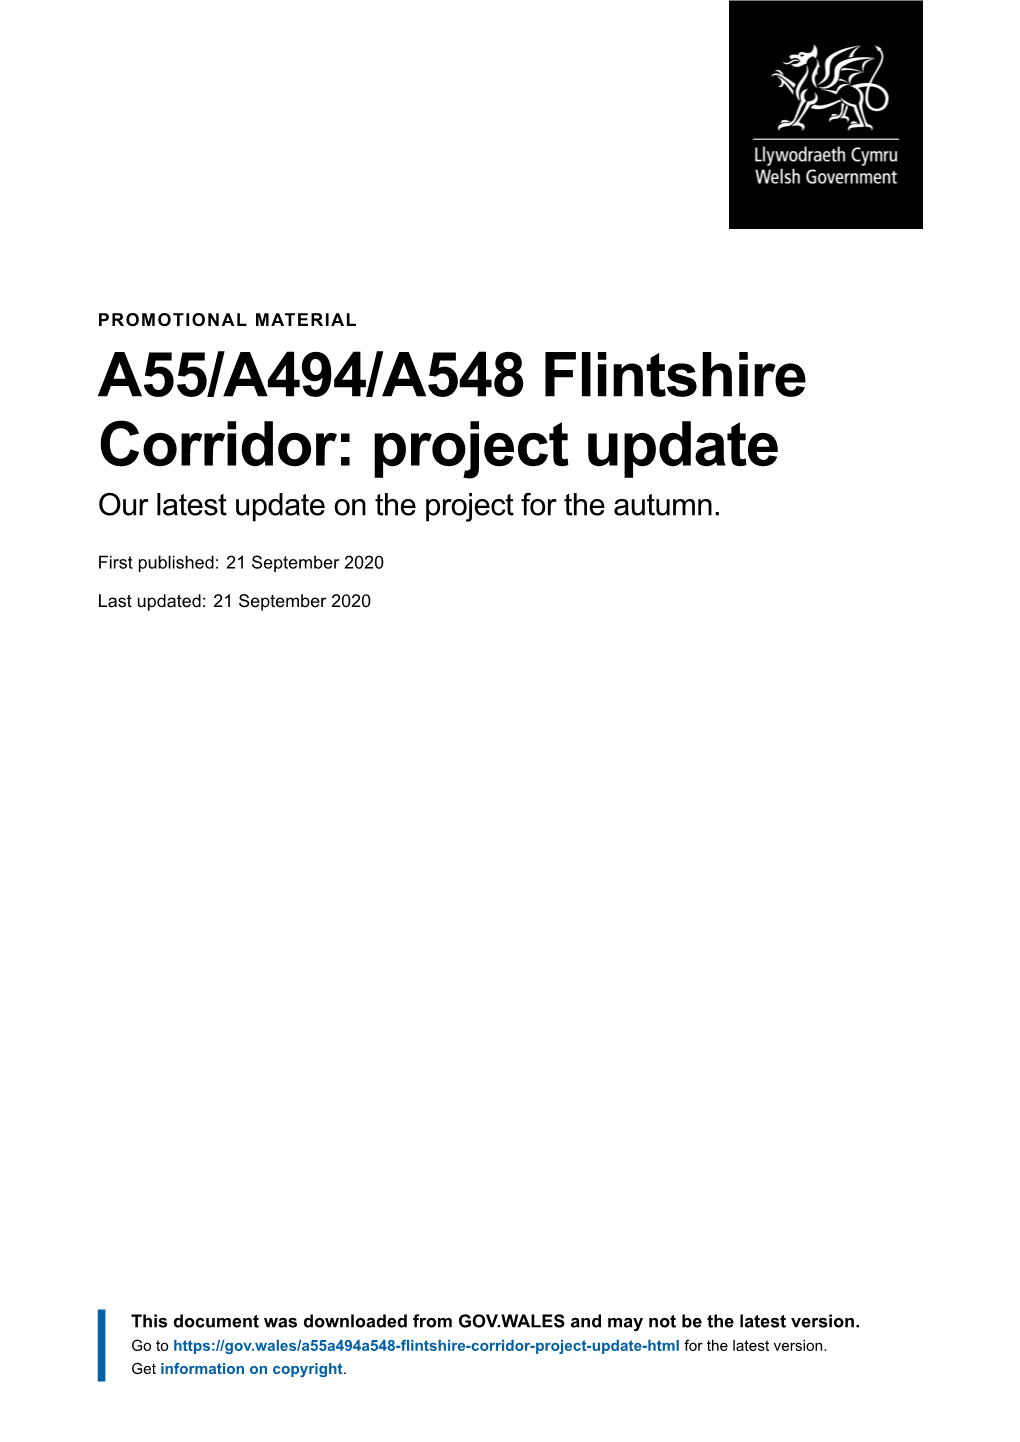 A55/A494/A548 Flintshire Corridor: Project Update | GOV.WALES